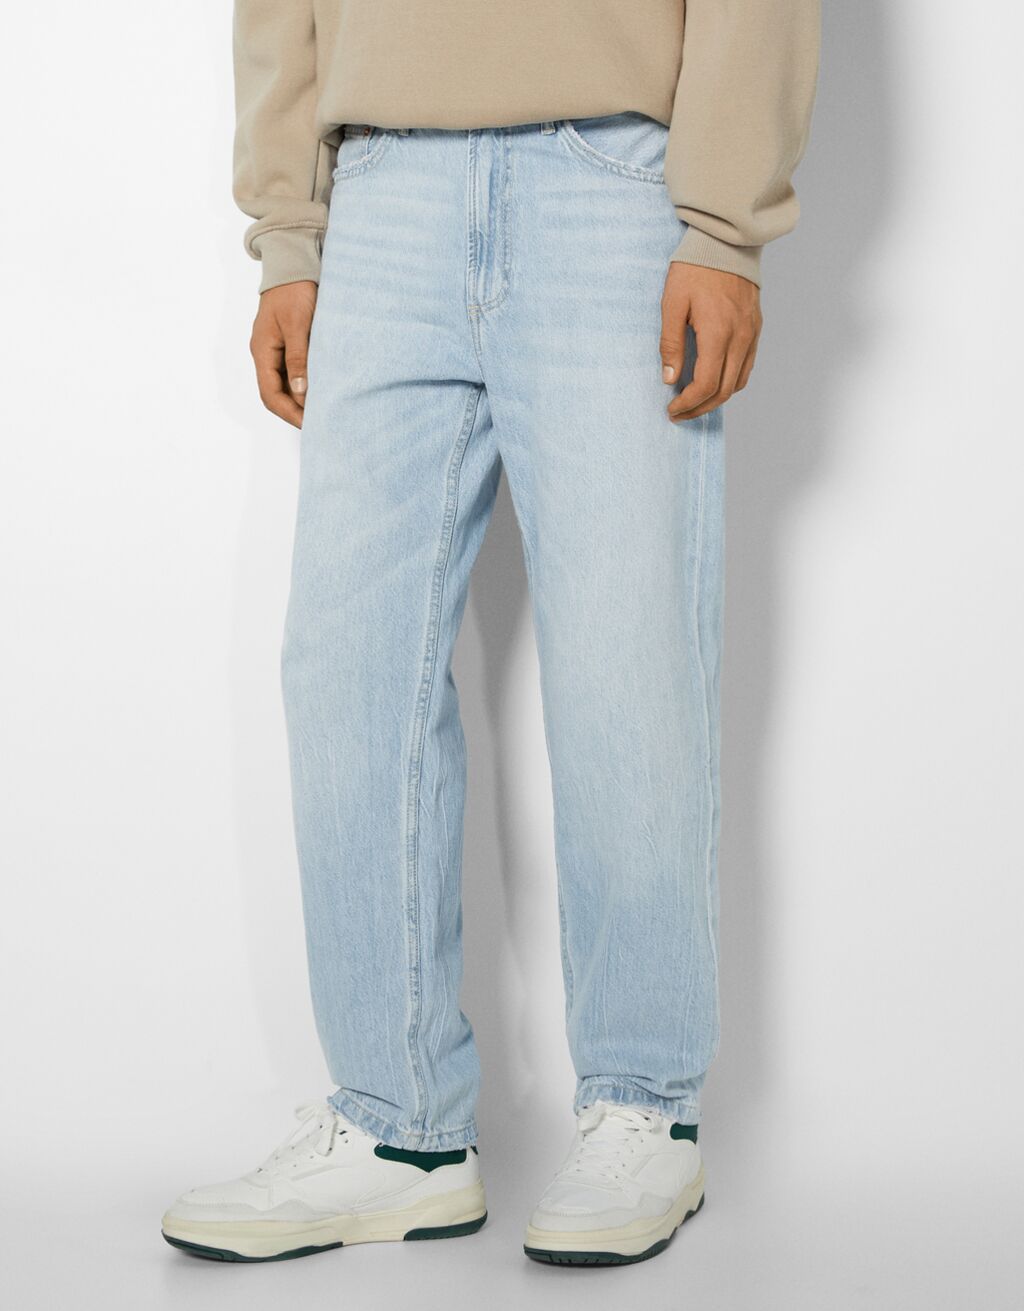 ג'ינס wide leg בסגנון שנות ה-90